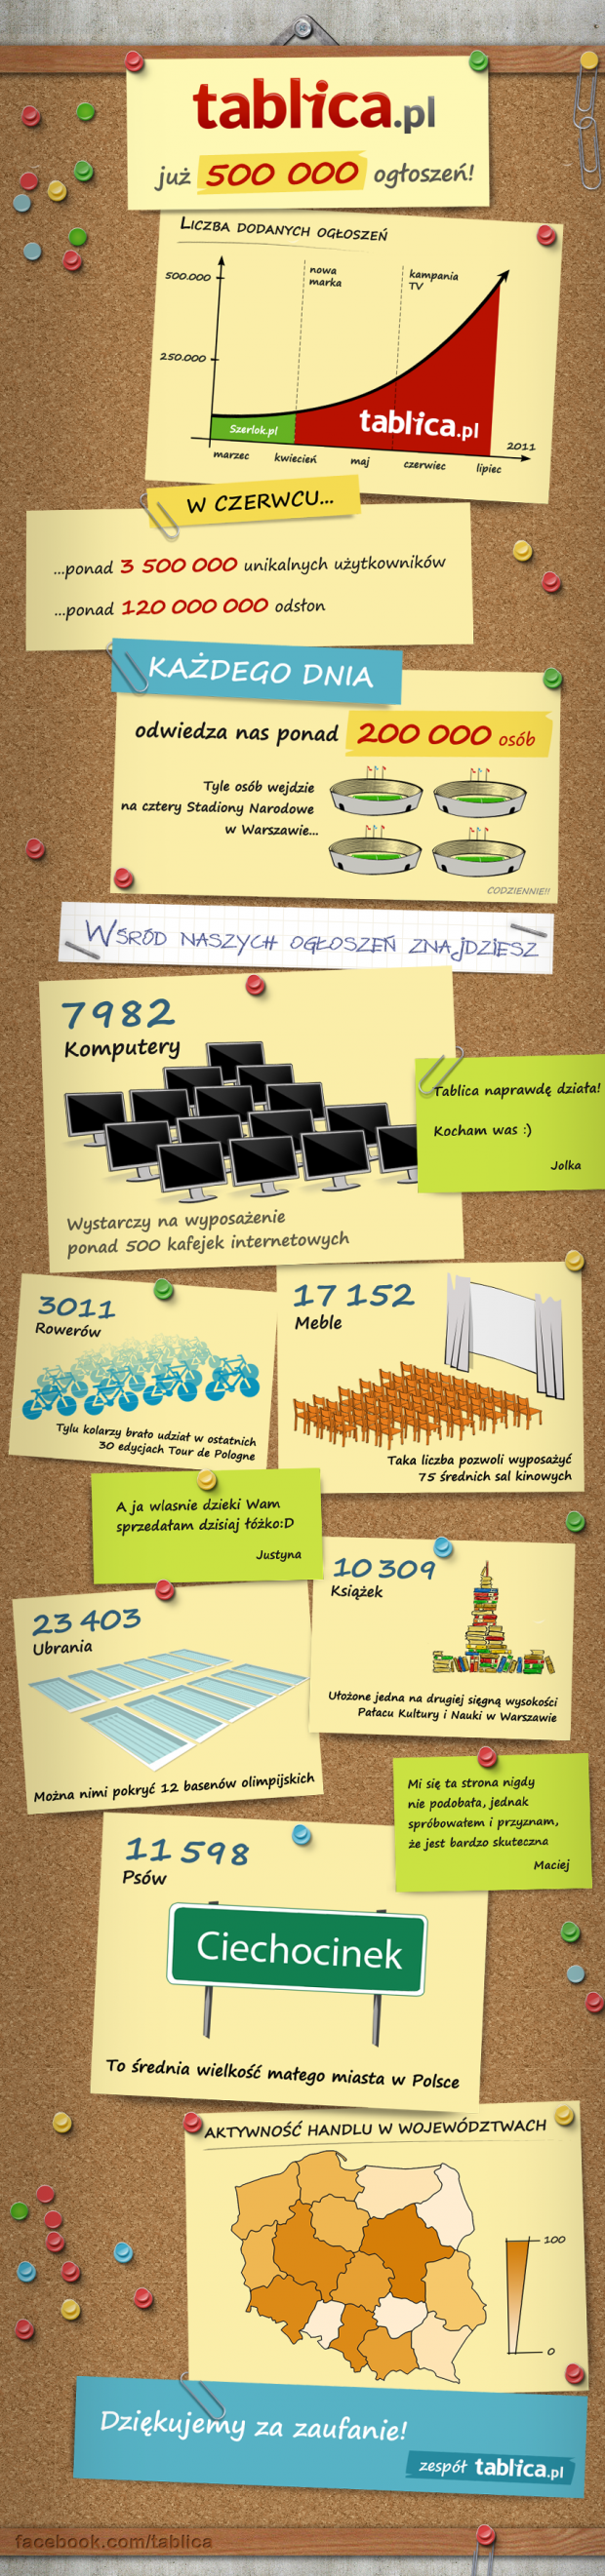 infografika: Tablica.pl